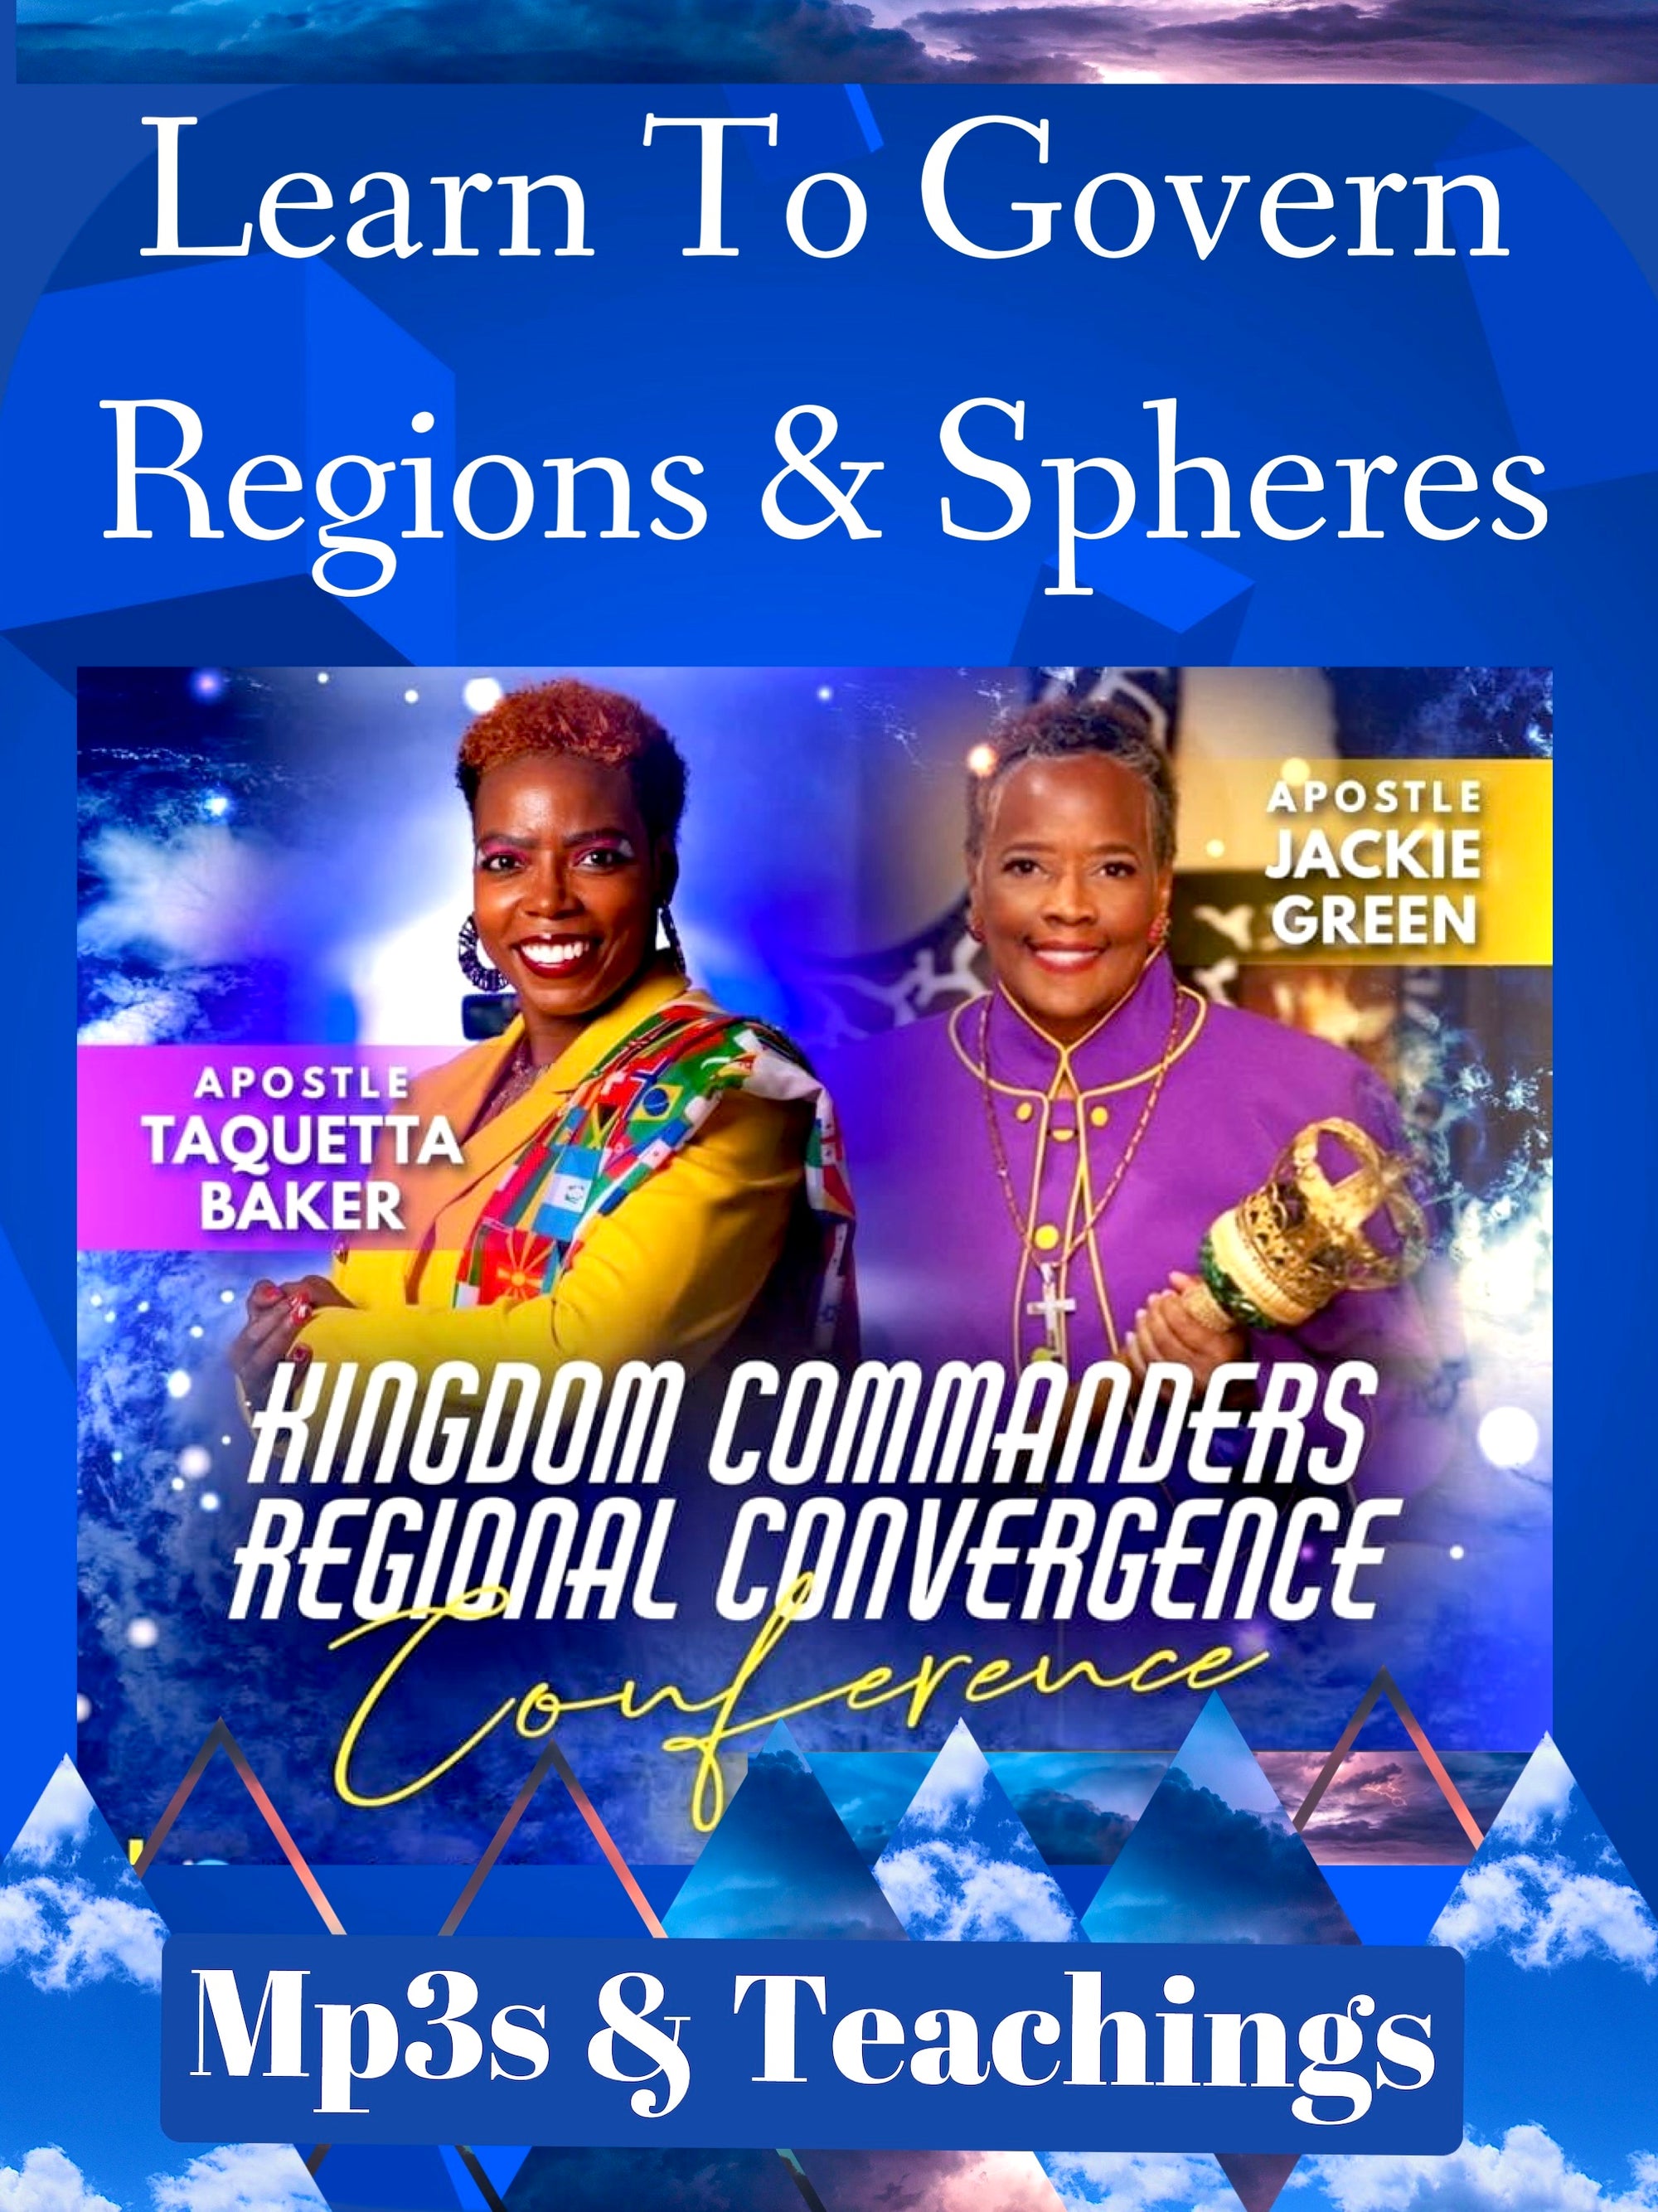 Kingdom Commanders Regional Convergence Conference